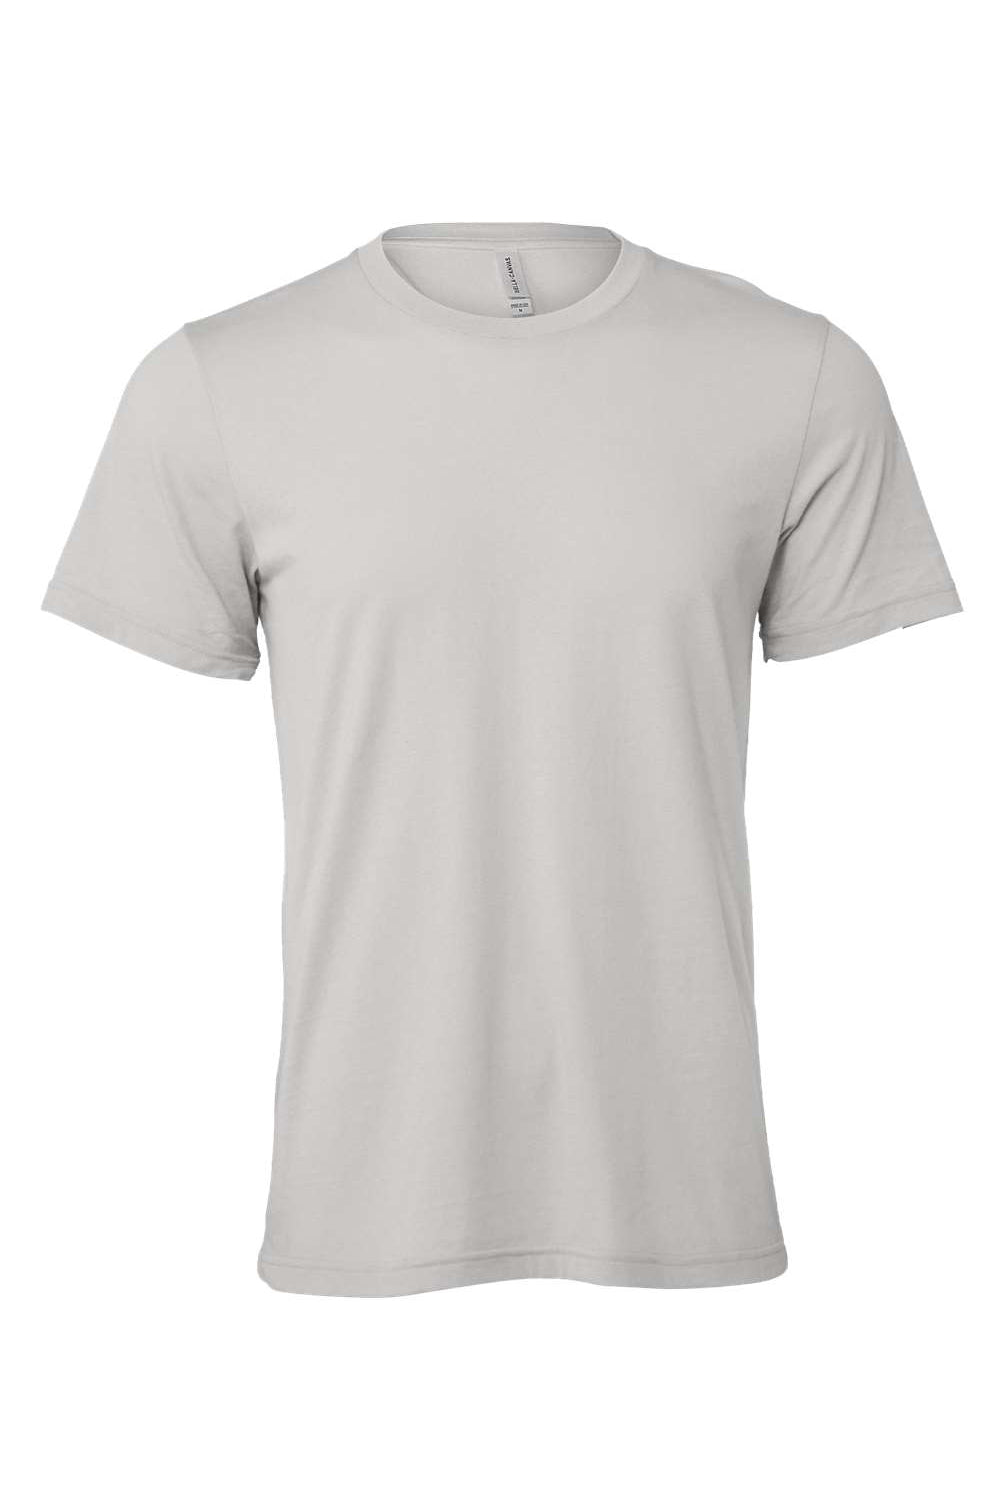 Bella + Canvas BC3001/3001C Mens Jersey Short Sleeve Crewneck T-Shirt Solid Athletic Grey Flat Front